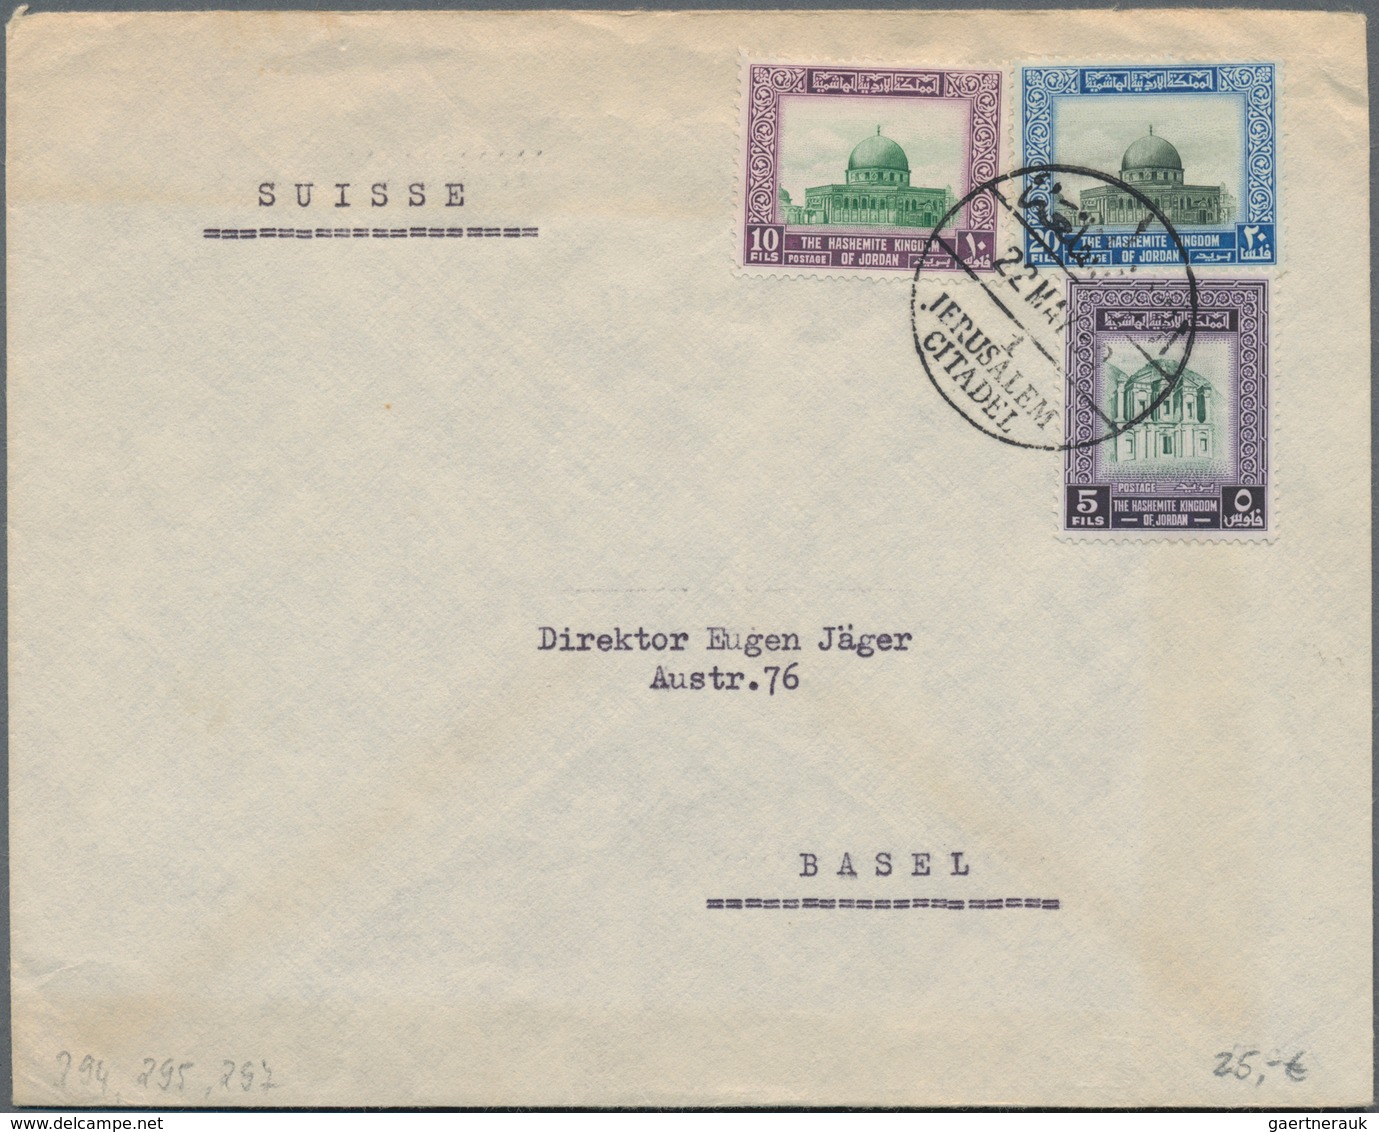 Jordanien: 1934/88 (ca.), covers (17 inc. FDC x3), used ppc (8 inc. 1934 to Addis Abeba/Ethiopia), a